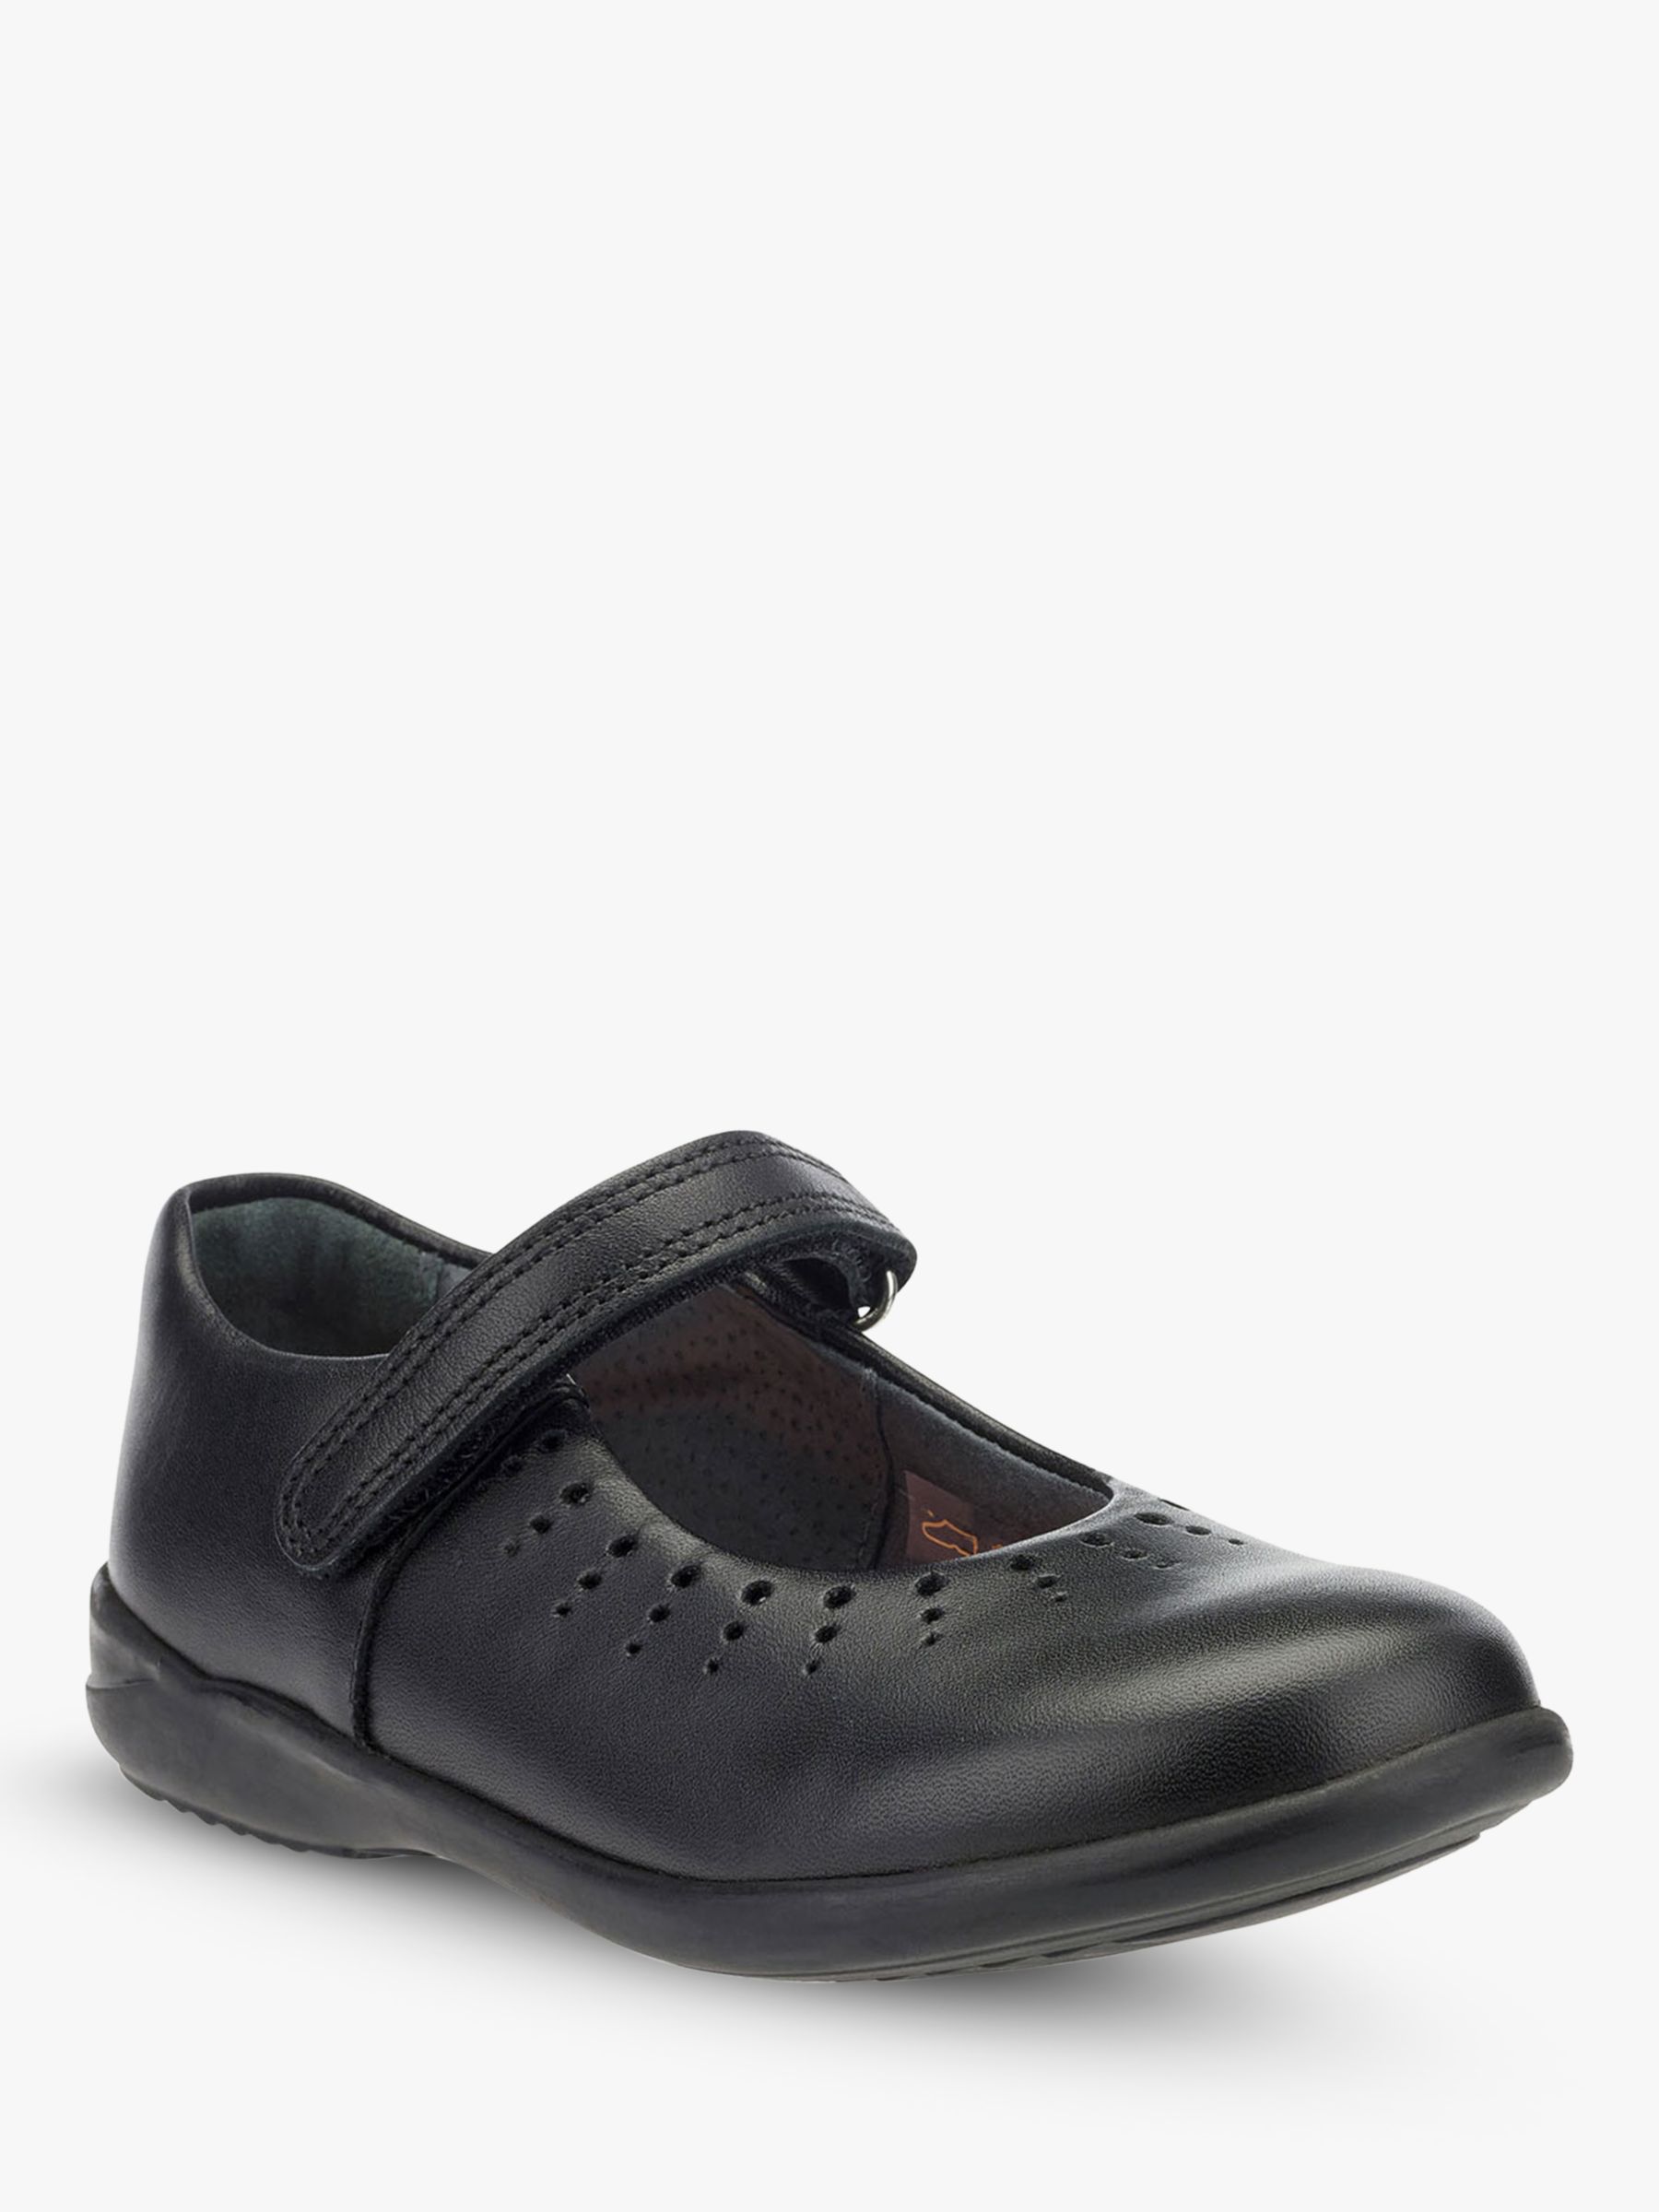 Mary Jane Leather Shoes, Black 